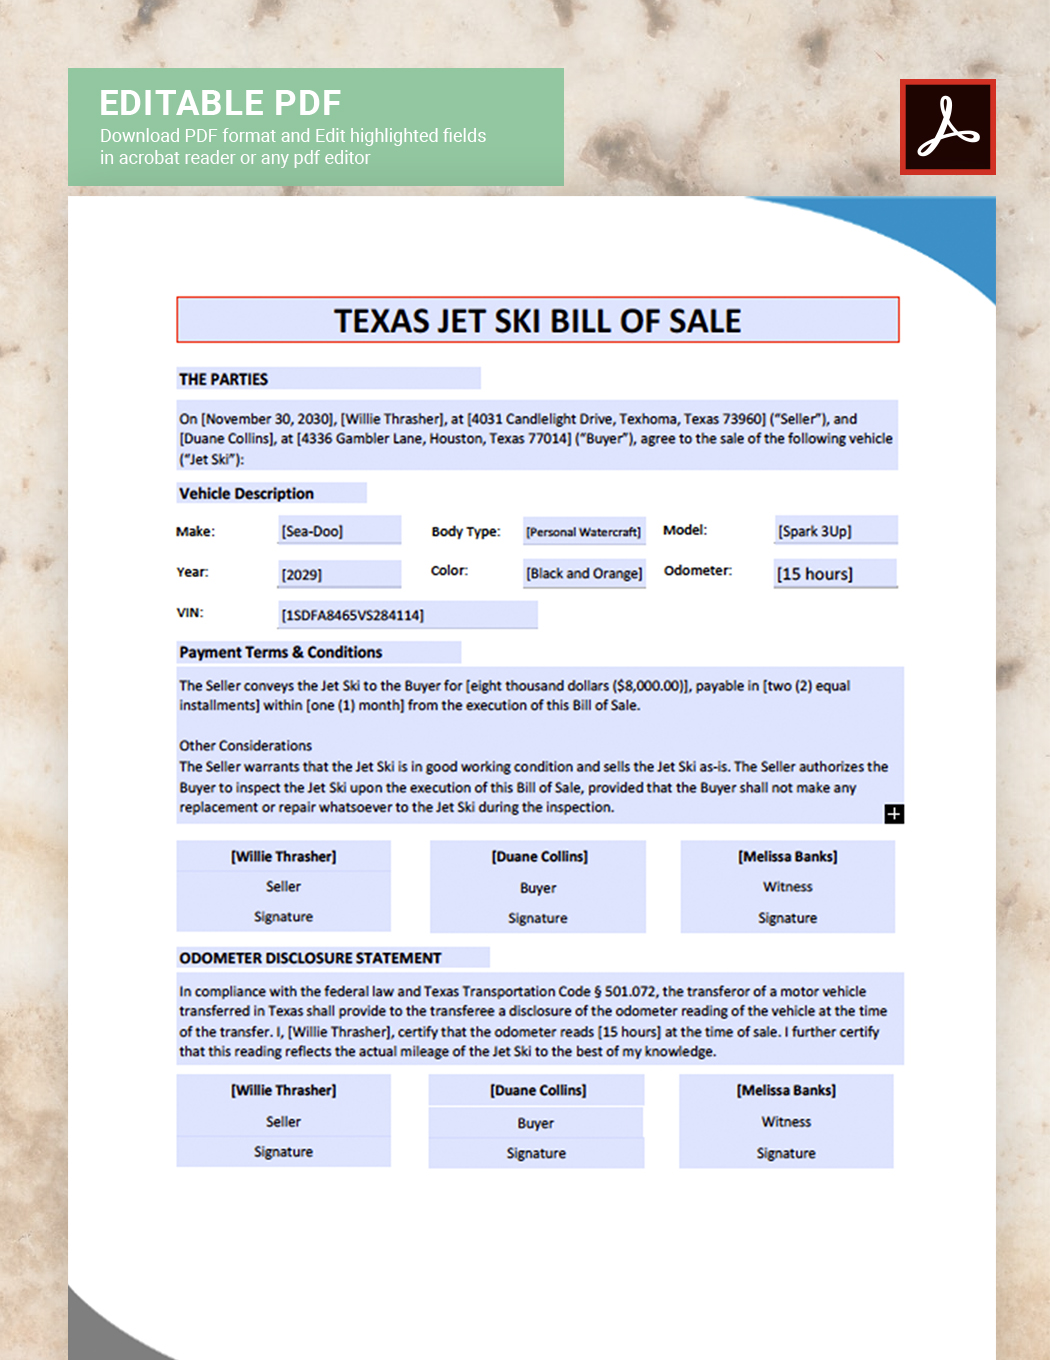 Texas Jet Ski Bill of Sale Form Template